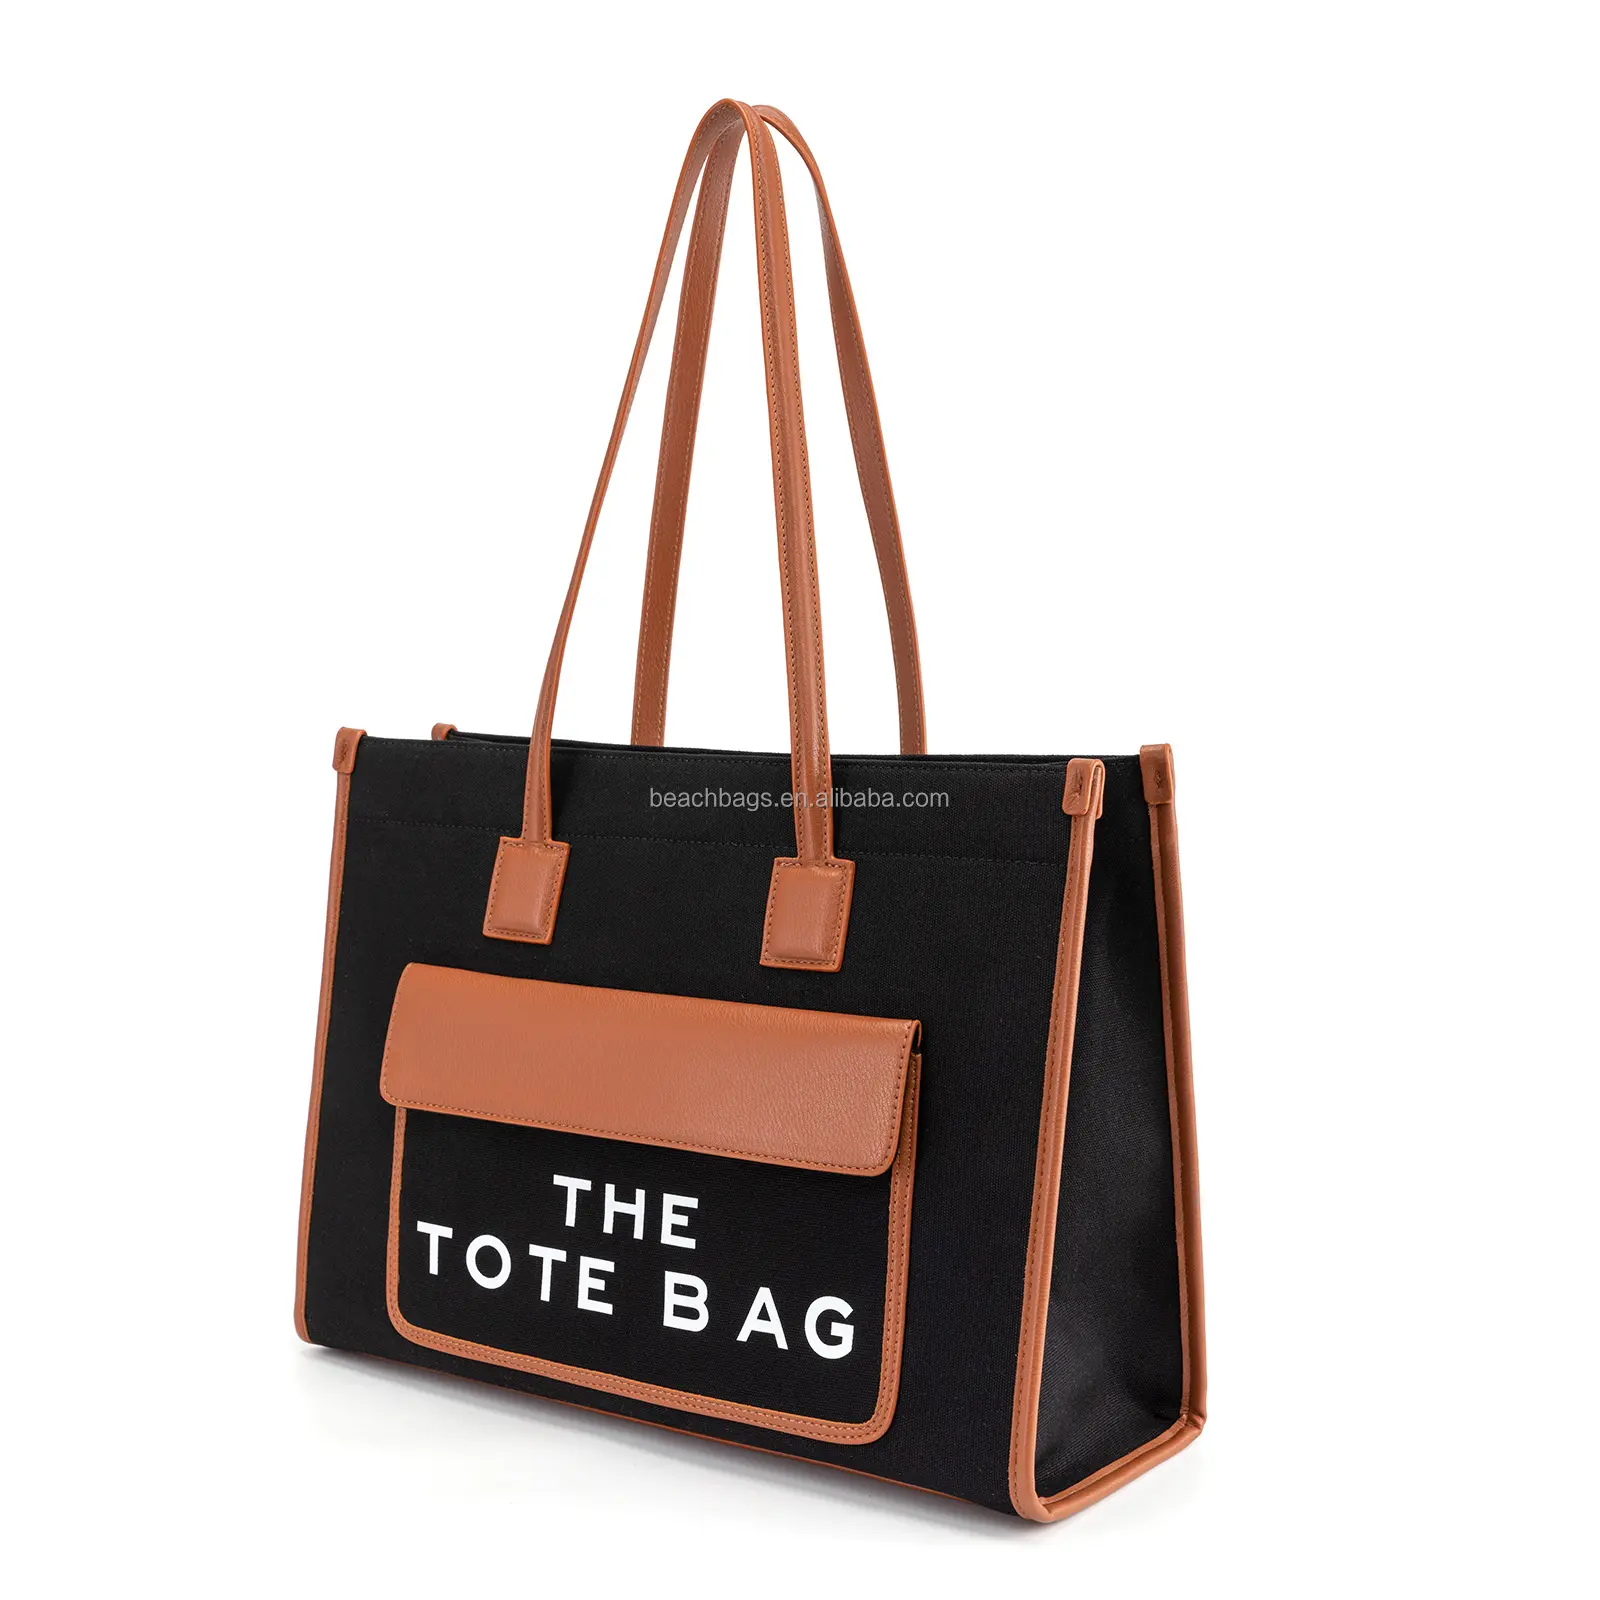 Custom trending sacs a main tendance women's tote bags shopping fashion bags for ladies girls bolsas dama spring female handbags